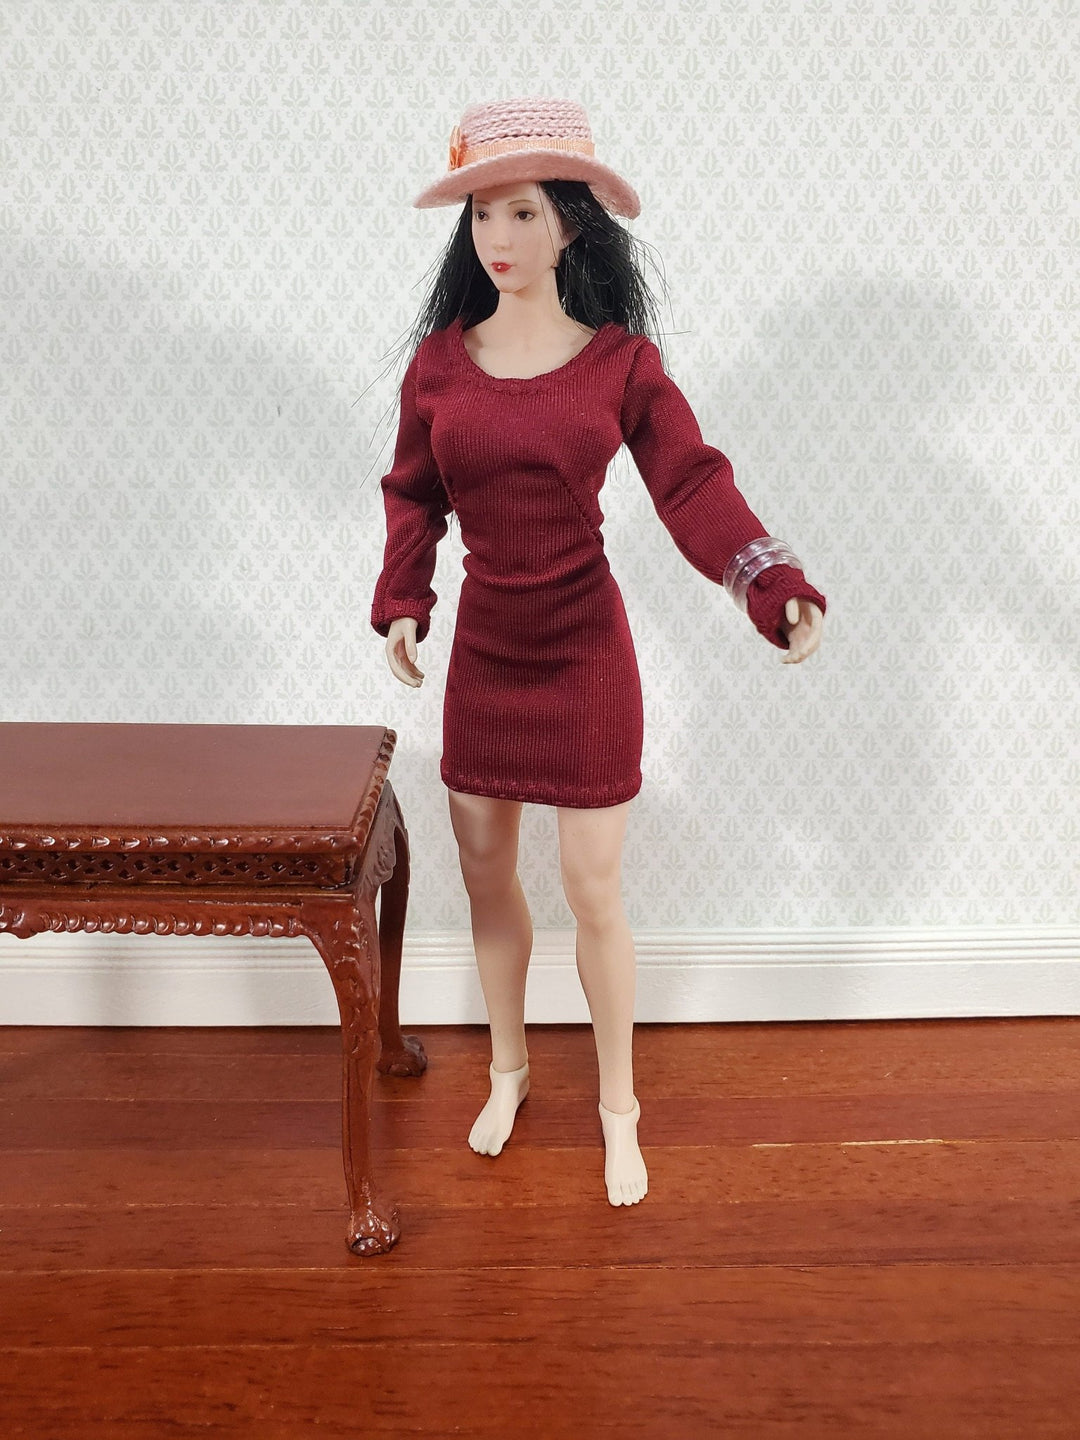 Miniature Ladies Hat Pink fits 6 Phicen TBLeague Female 1:12 Scale  Wearable - Miniature Crush